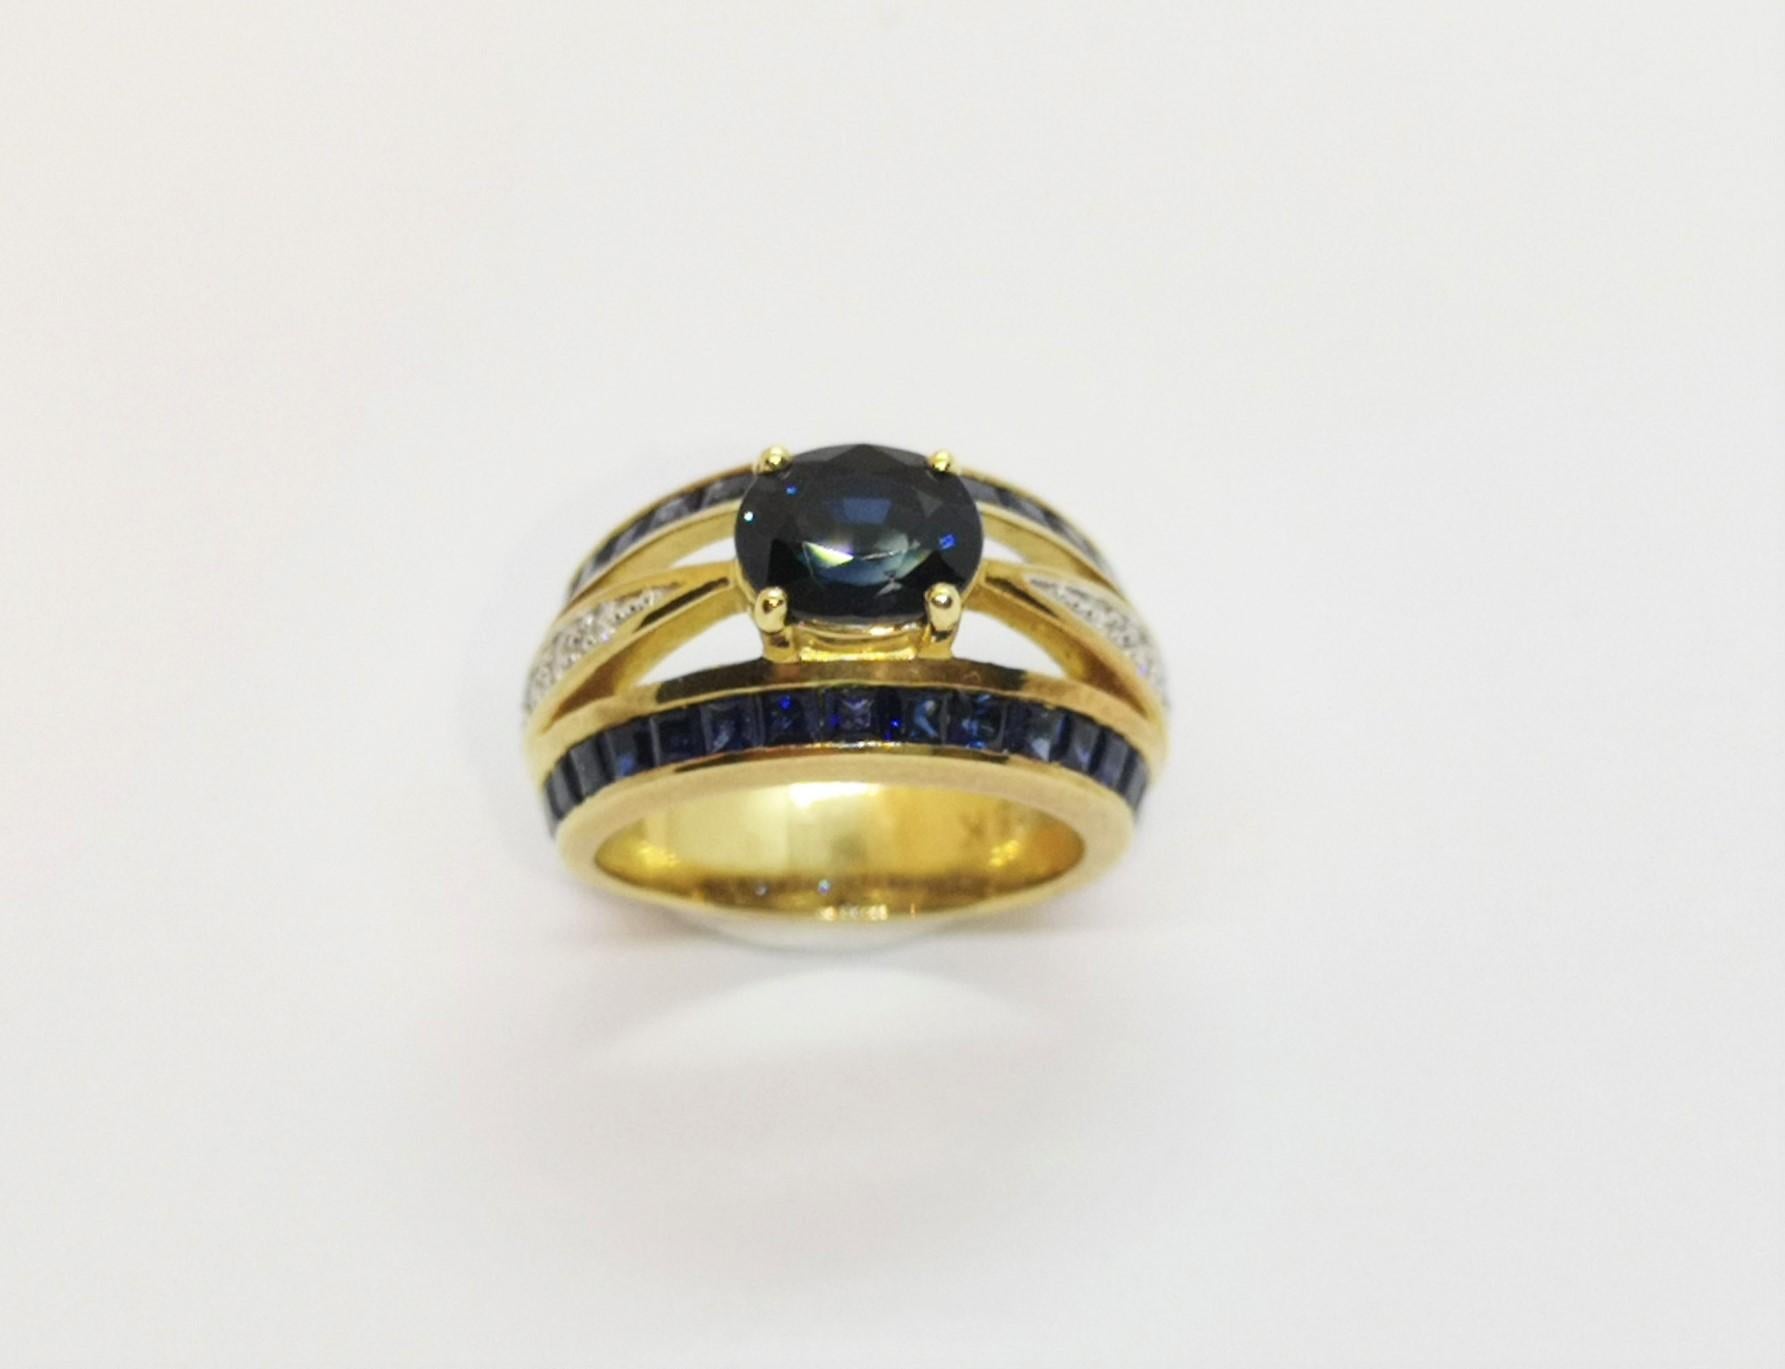 Blue Sapphire 1.69 carats with Blue Sapphire 1.86 carats and Diamond 0.11 carat Ring set in 18 Karat Gold Settings

Width: 0.7 cm
Length: 0.6 cm 
Ring Size: 49

